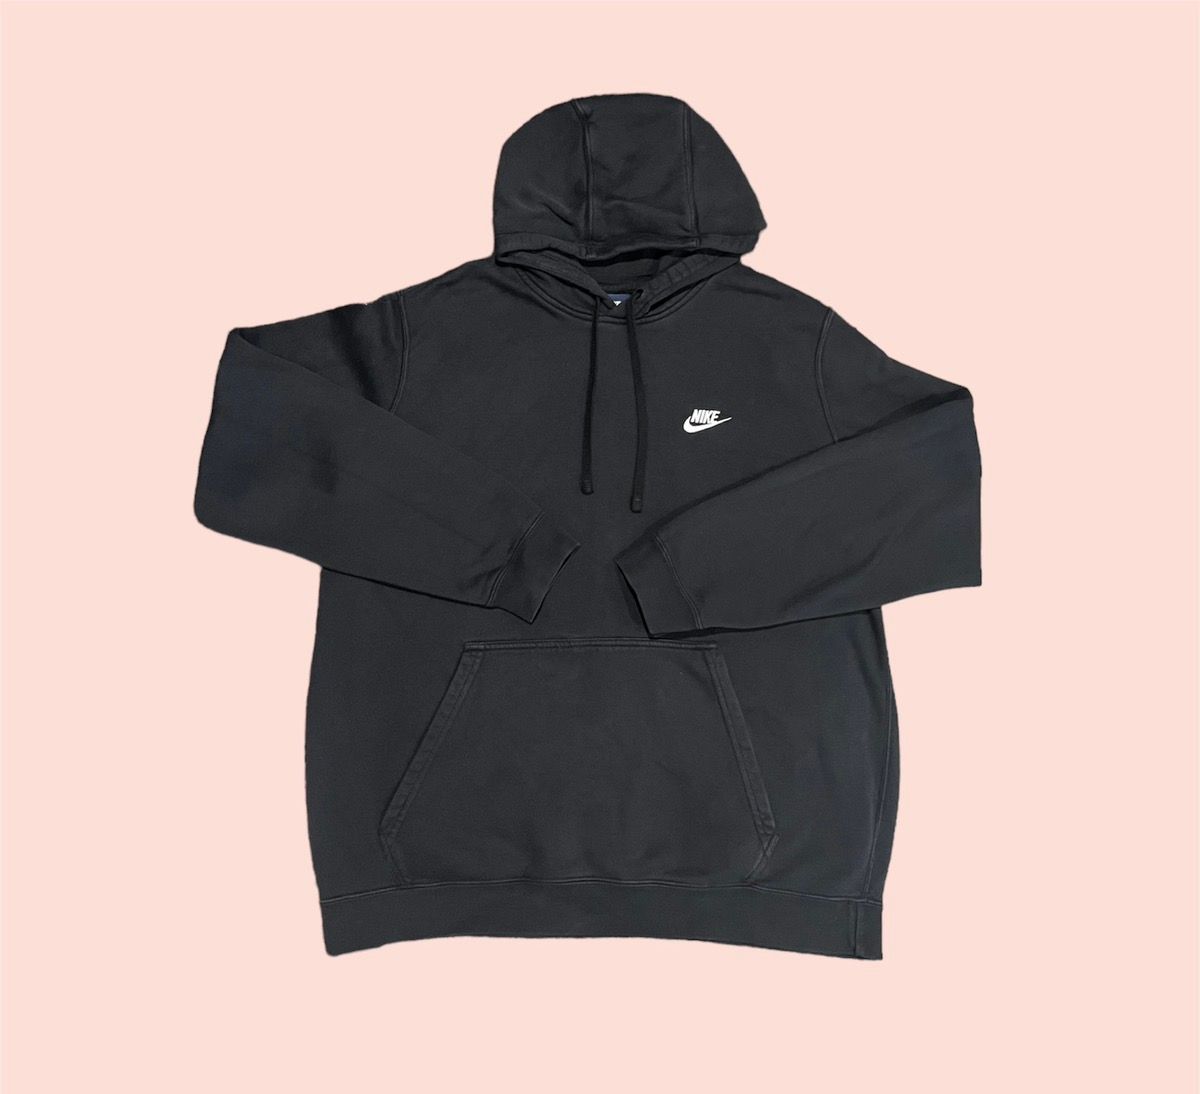 Nike Nike Black Hooded Sweatshirt Size US XL / EU 56 / 4 - 1 Preview